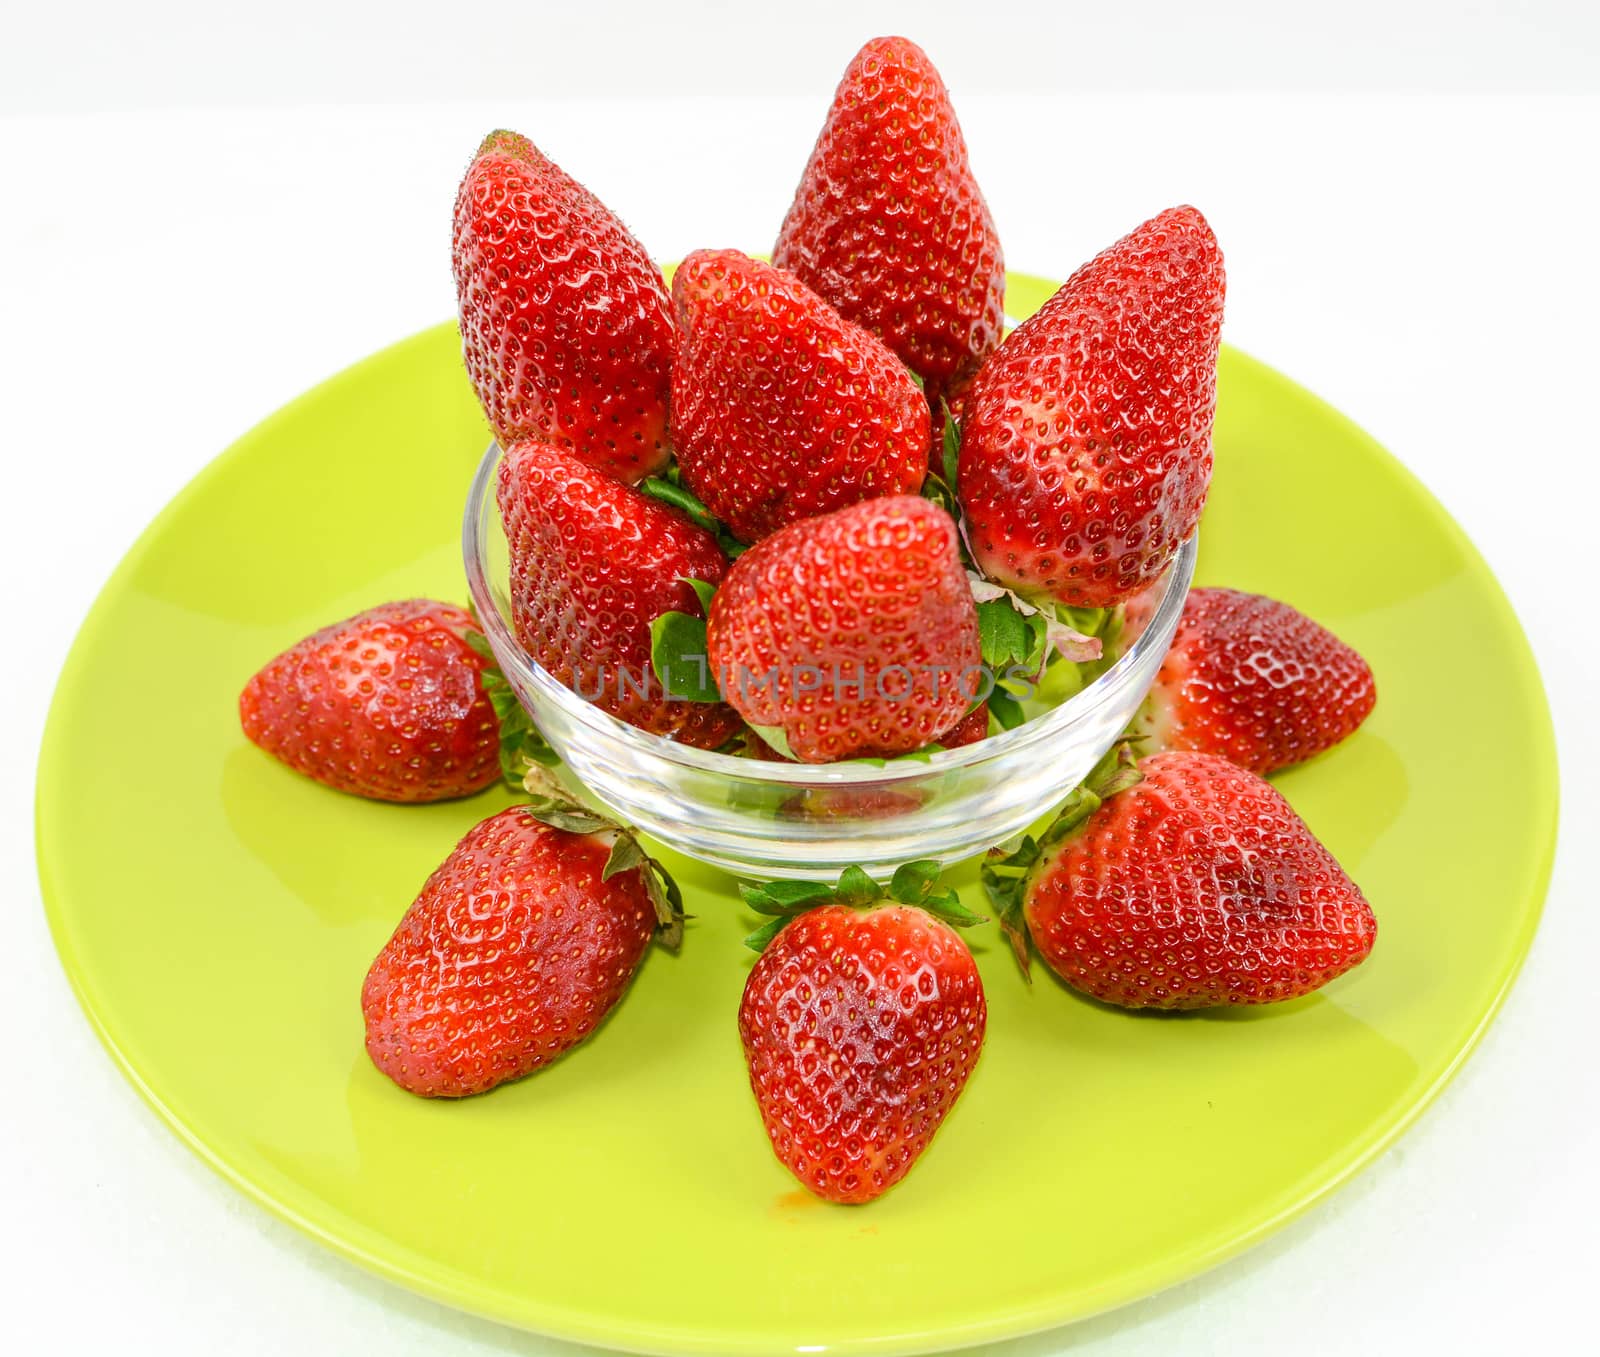 strawberries by iacobino